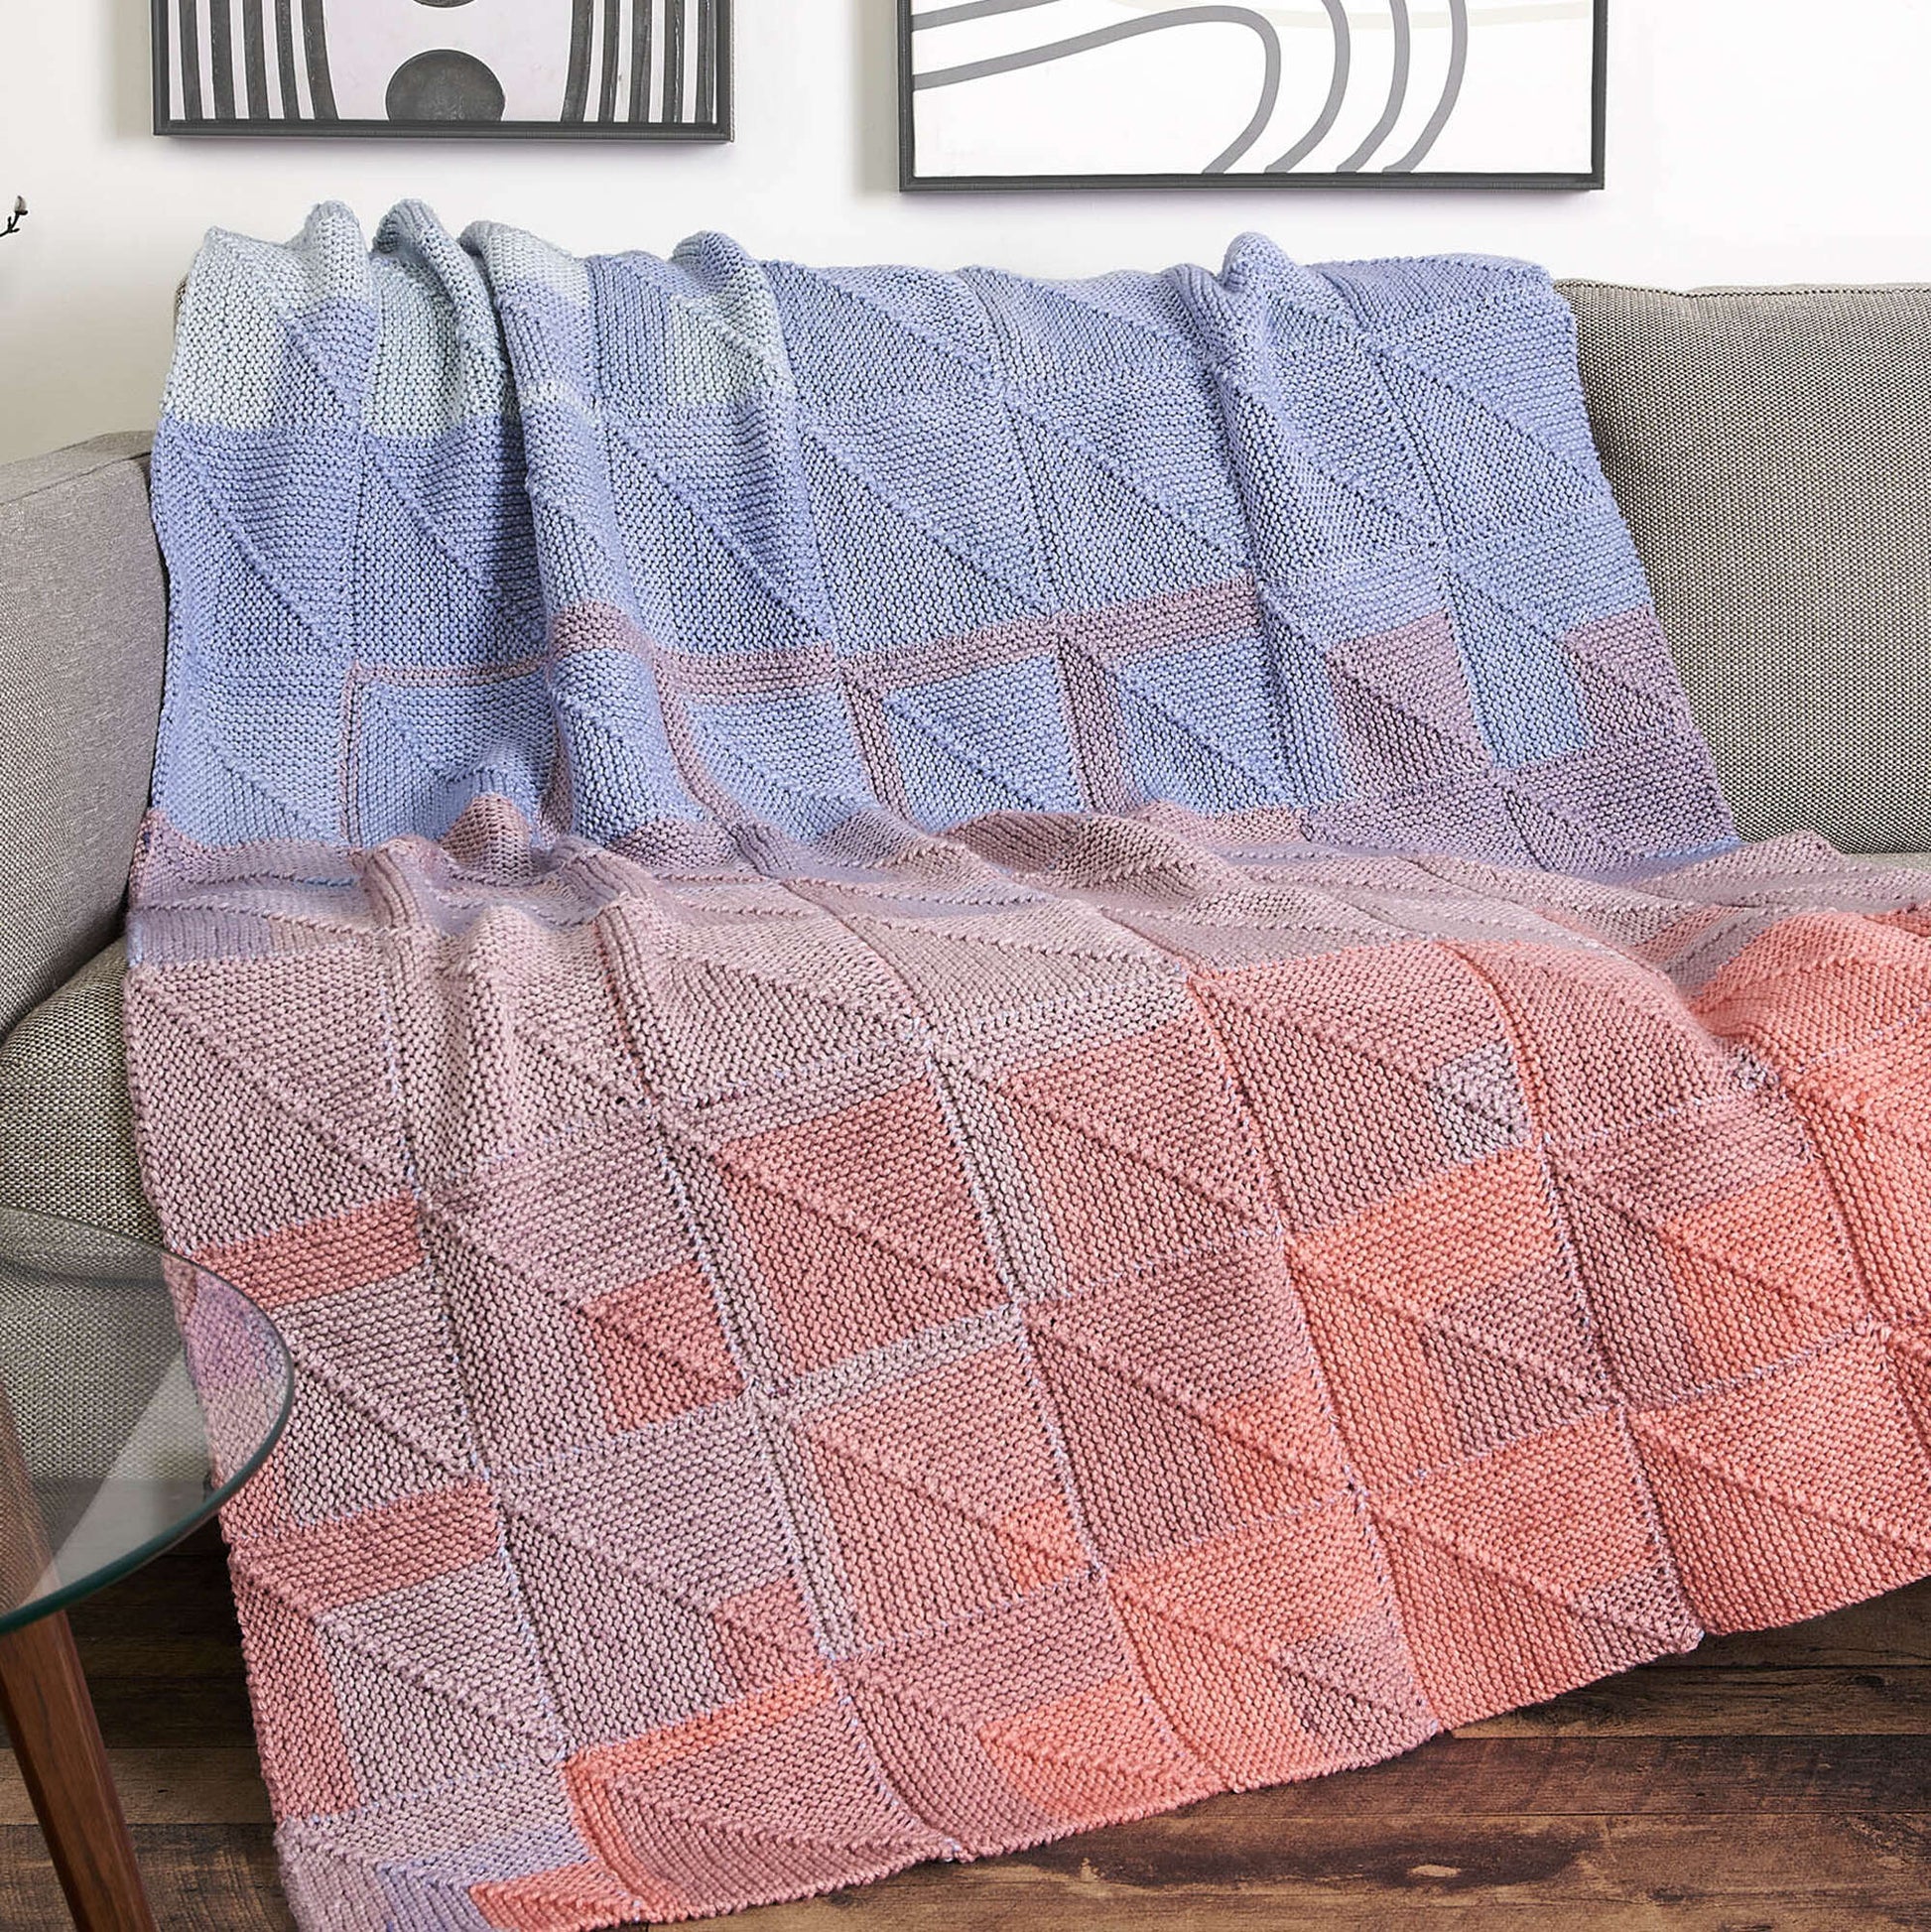 Free Caron Shade & Fade Knit Blanket Pattern